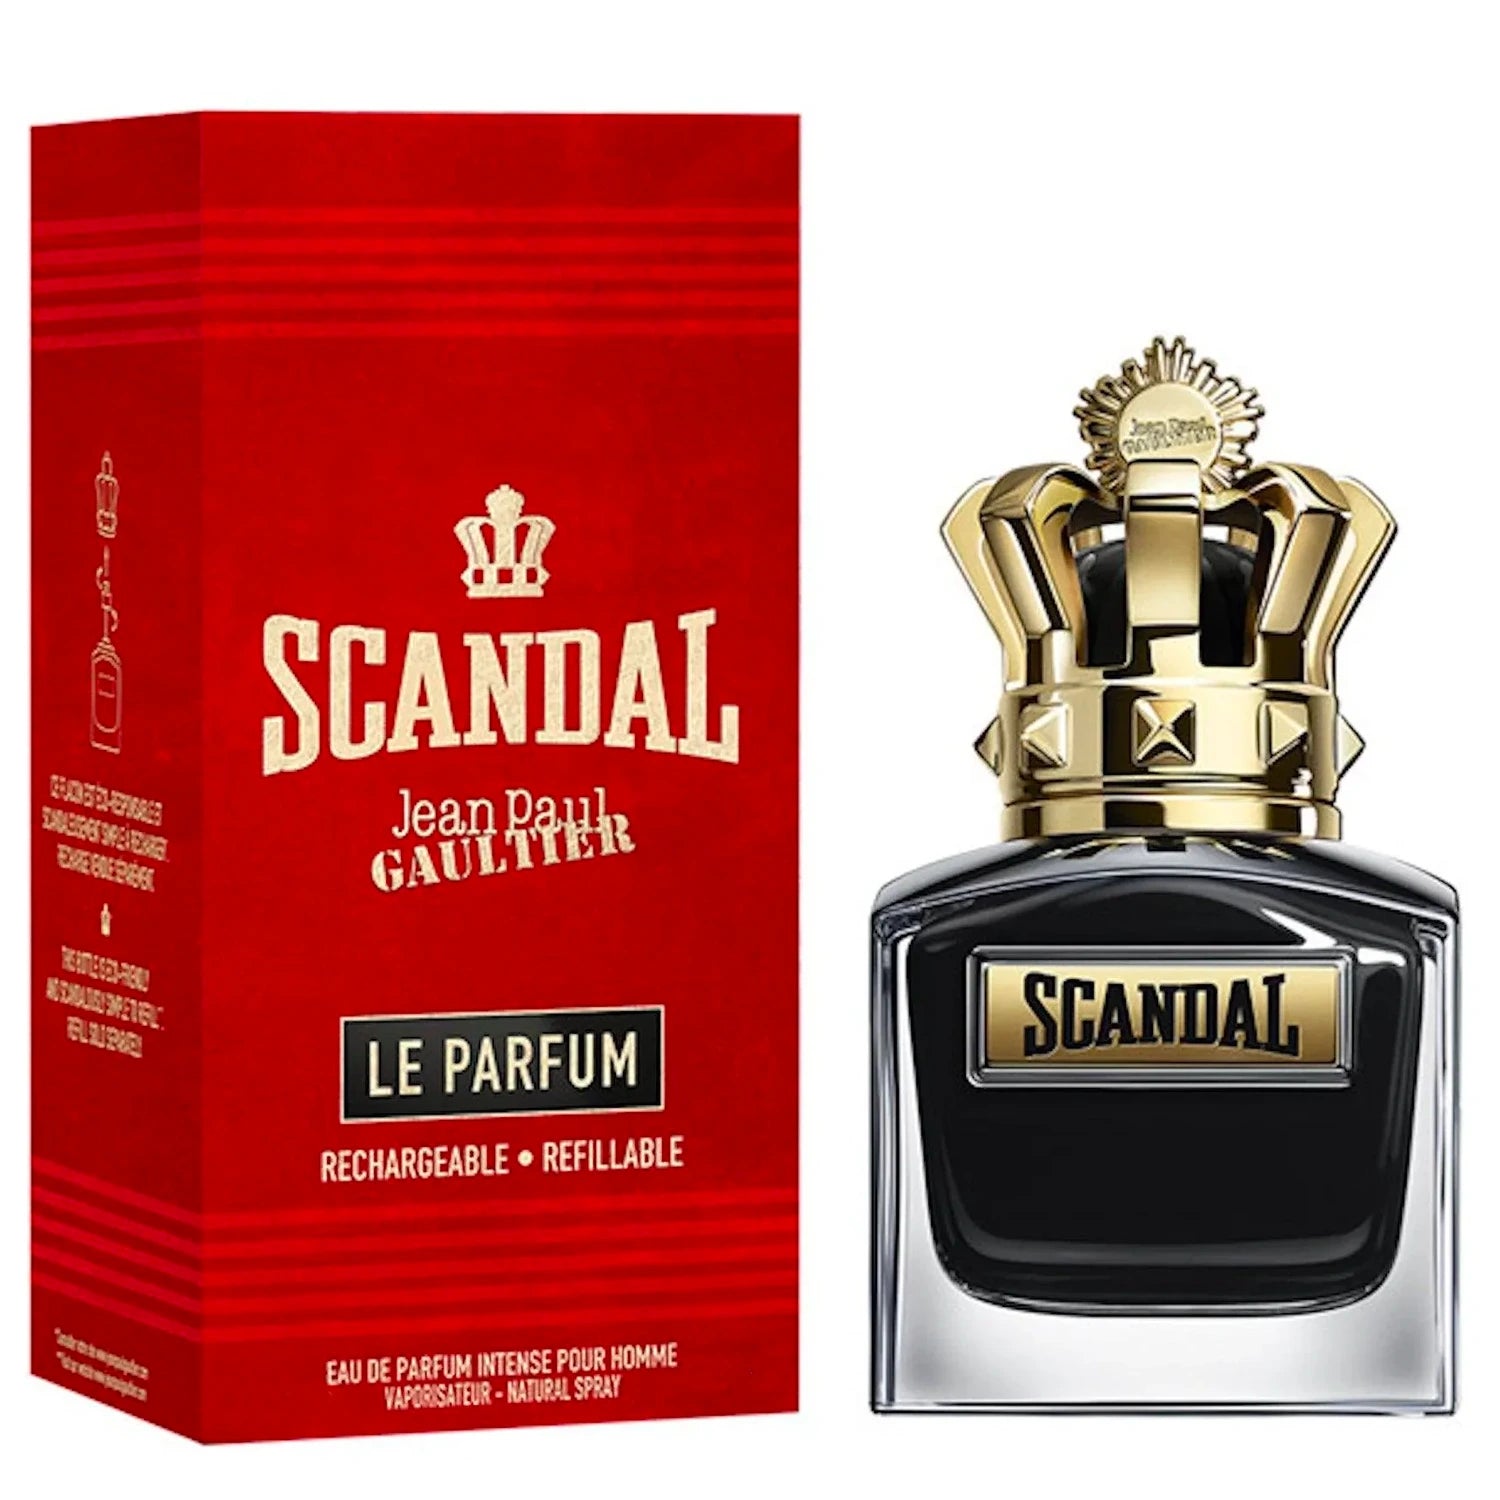 Best Jean Paul Gaultier for Men and Women Fragrances. #parfums #perfume  #parfum #cologne #fragrances #duft #fragrance #perfumes #allwhite  #whitelook, By Jeremy Fragrance